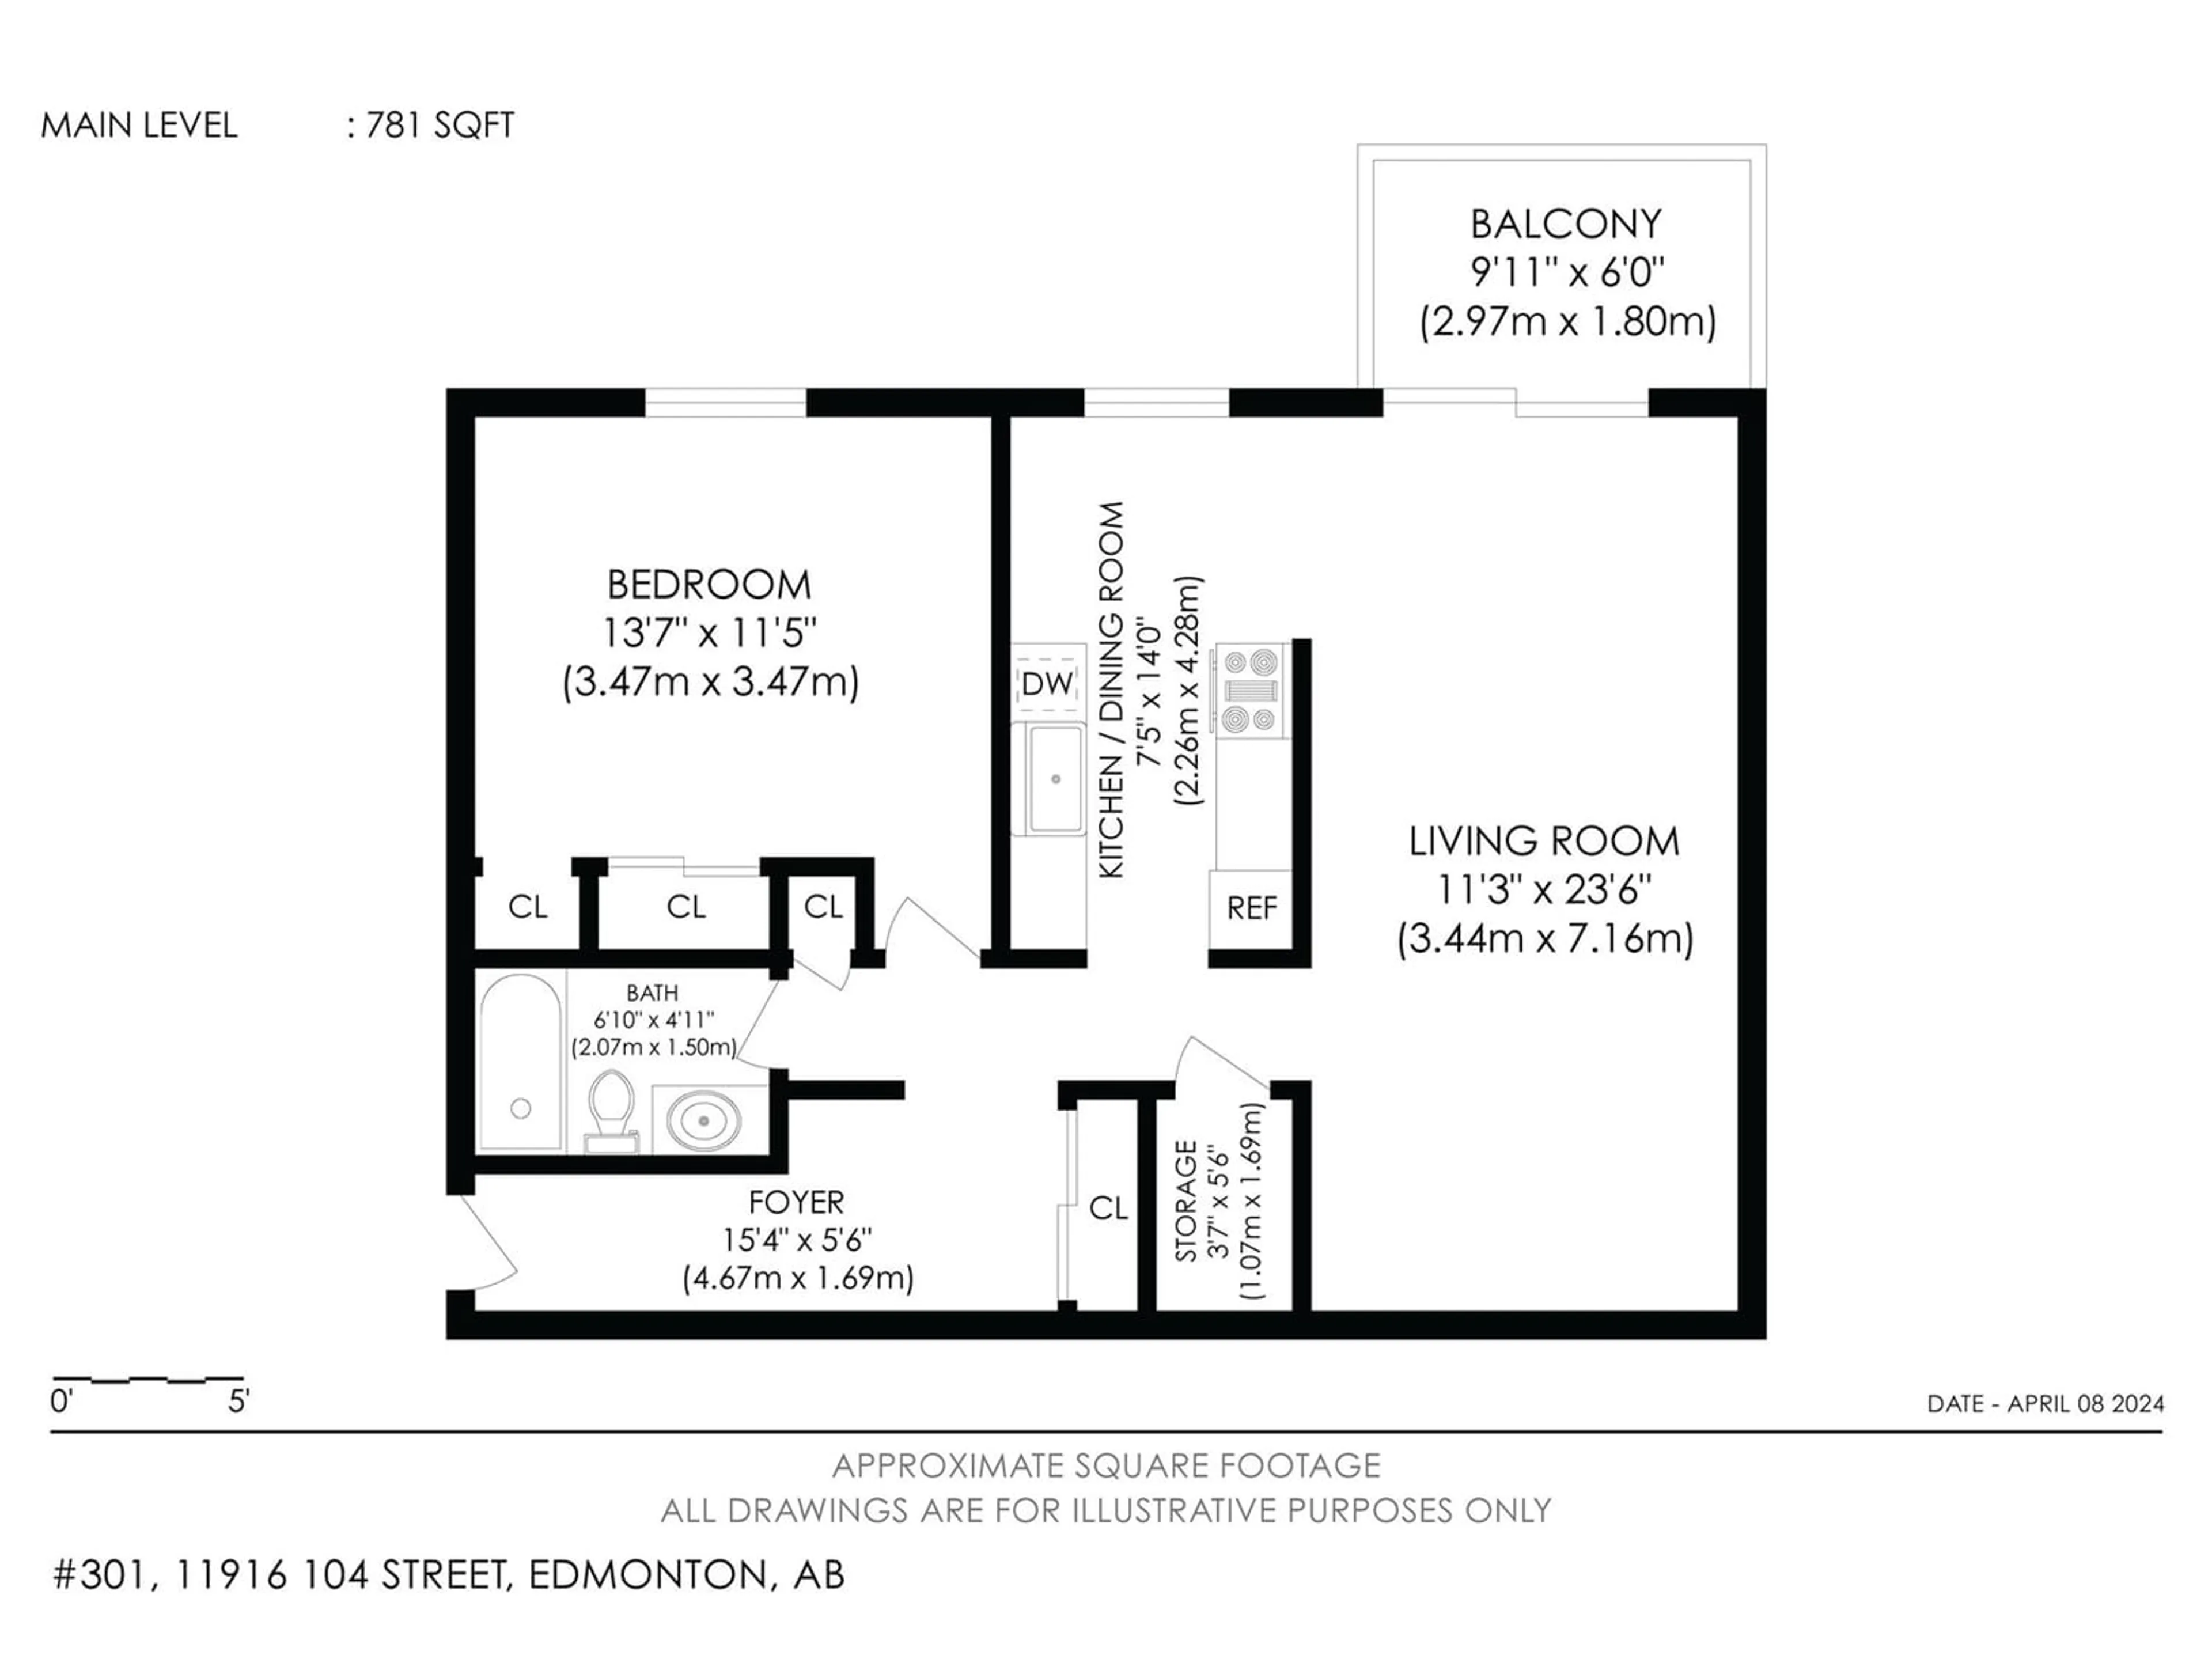 Floor plan for #301 11916 104 ST NW, Edmonton Alberta T5G2L2